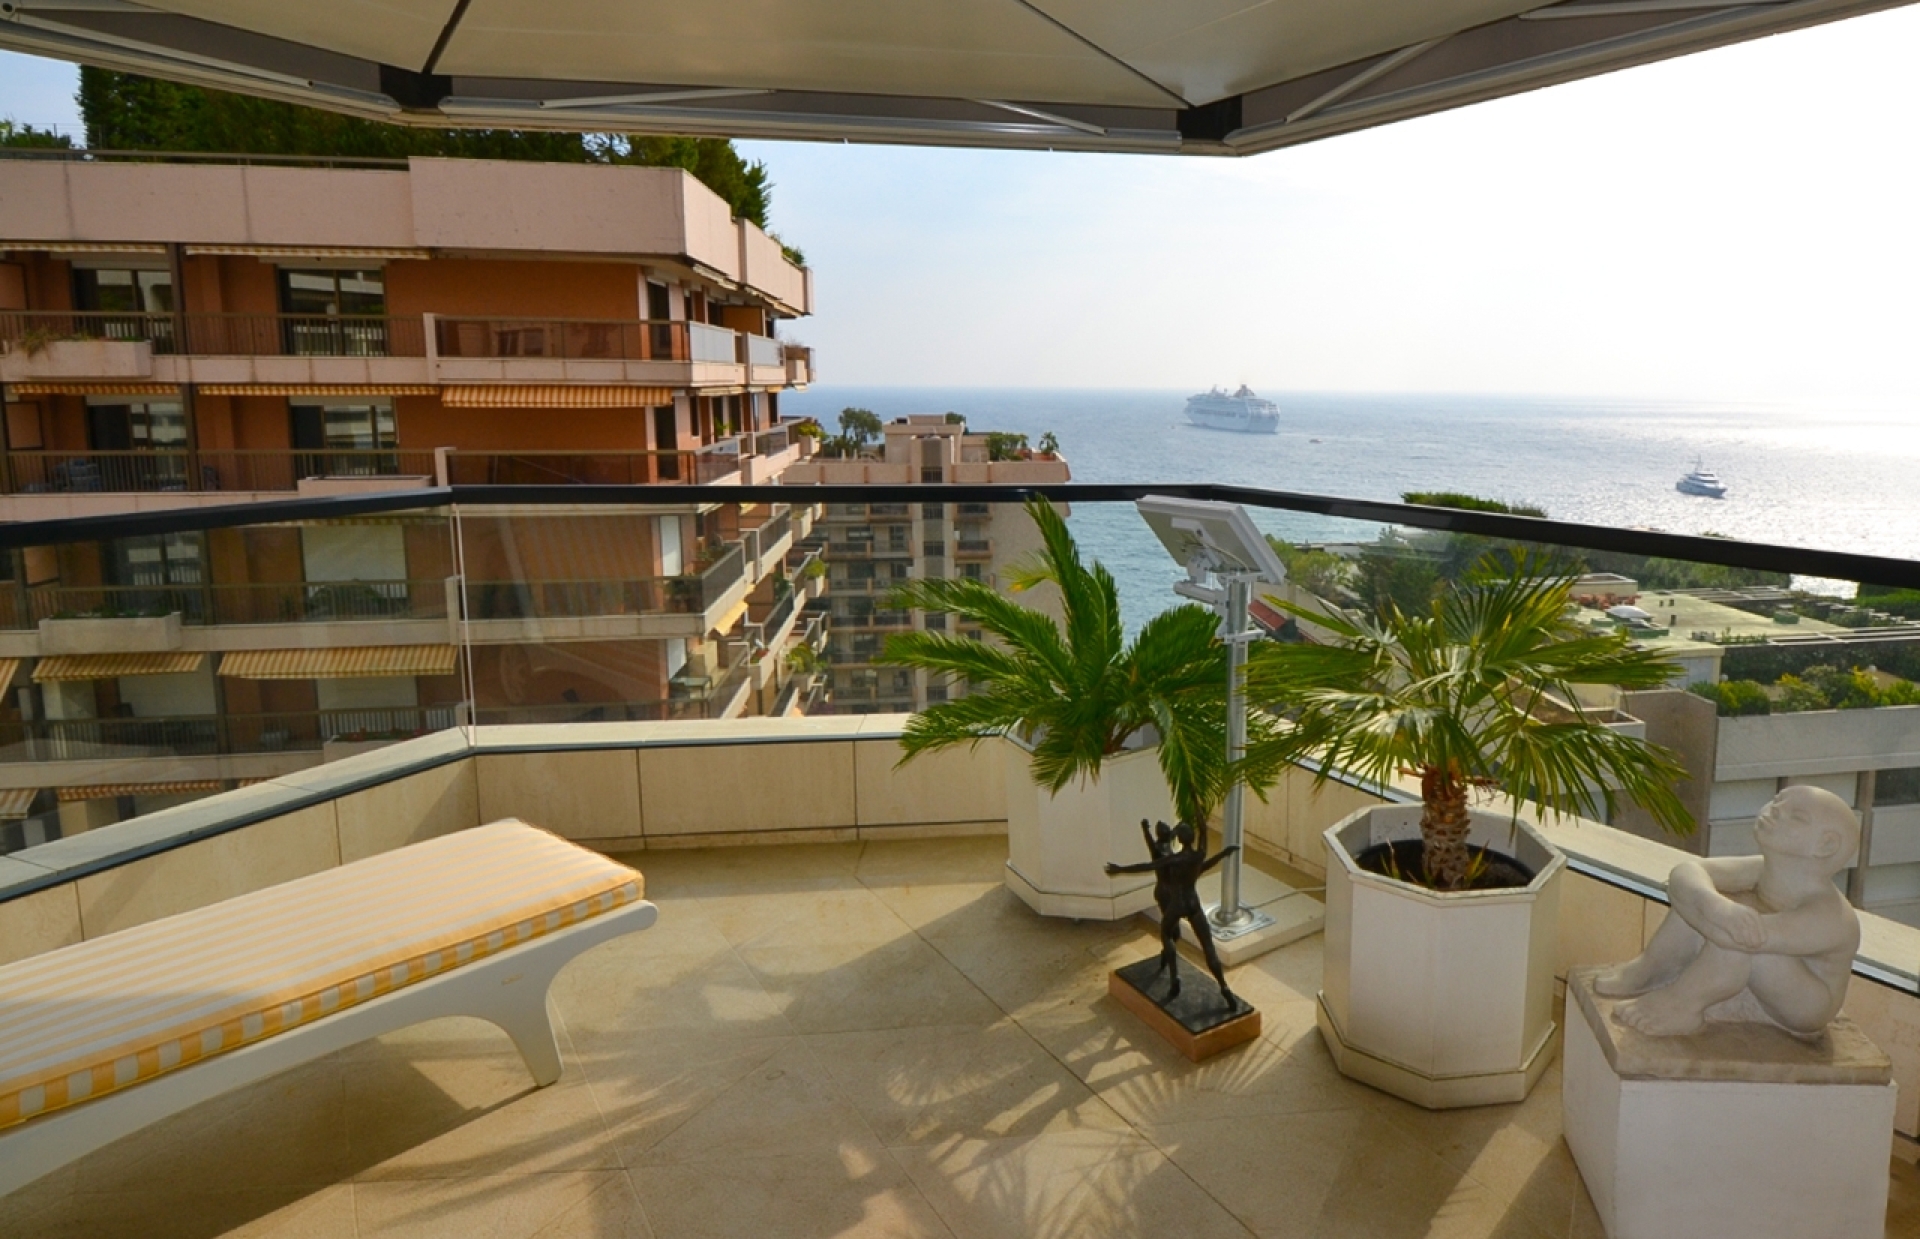 Dotta Appartement de 5 pieces a vendre - PRINCE DE GALLES - Monte-Carlo - Monaco - imgftrgh